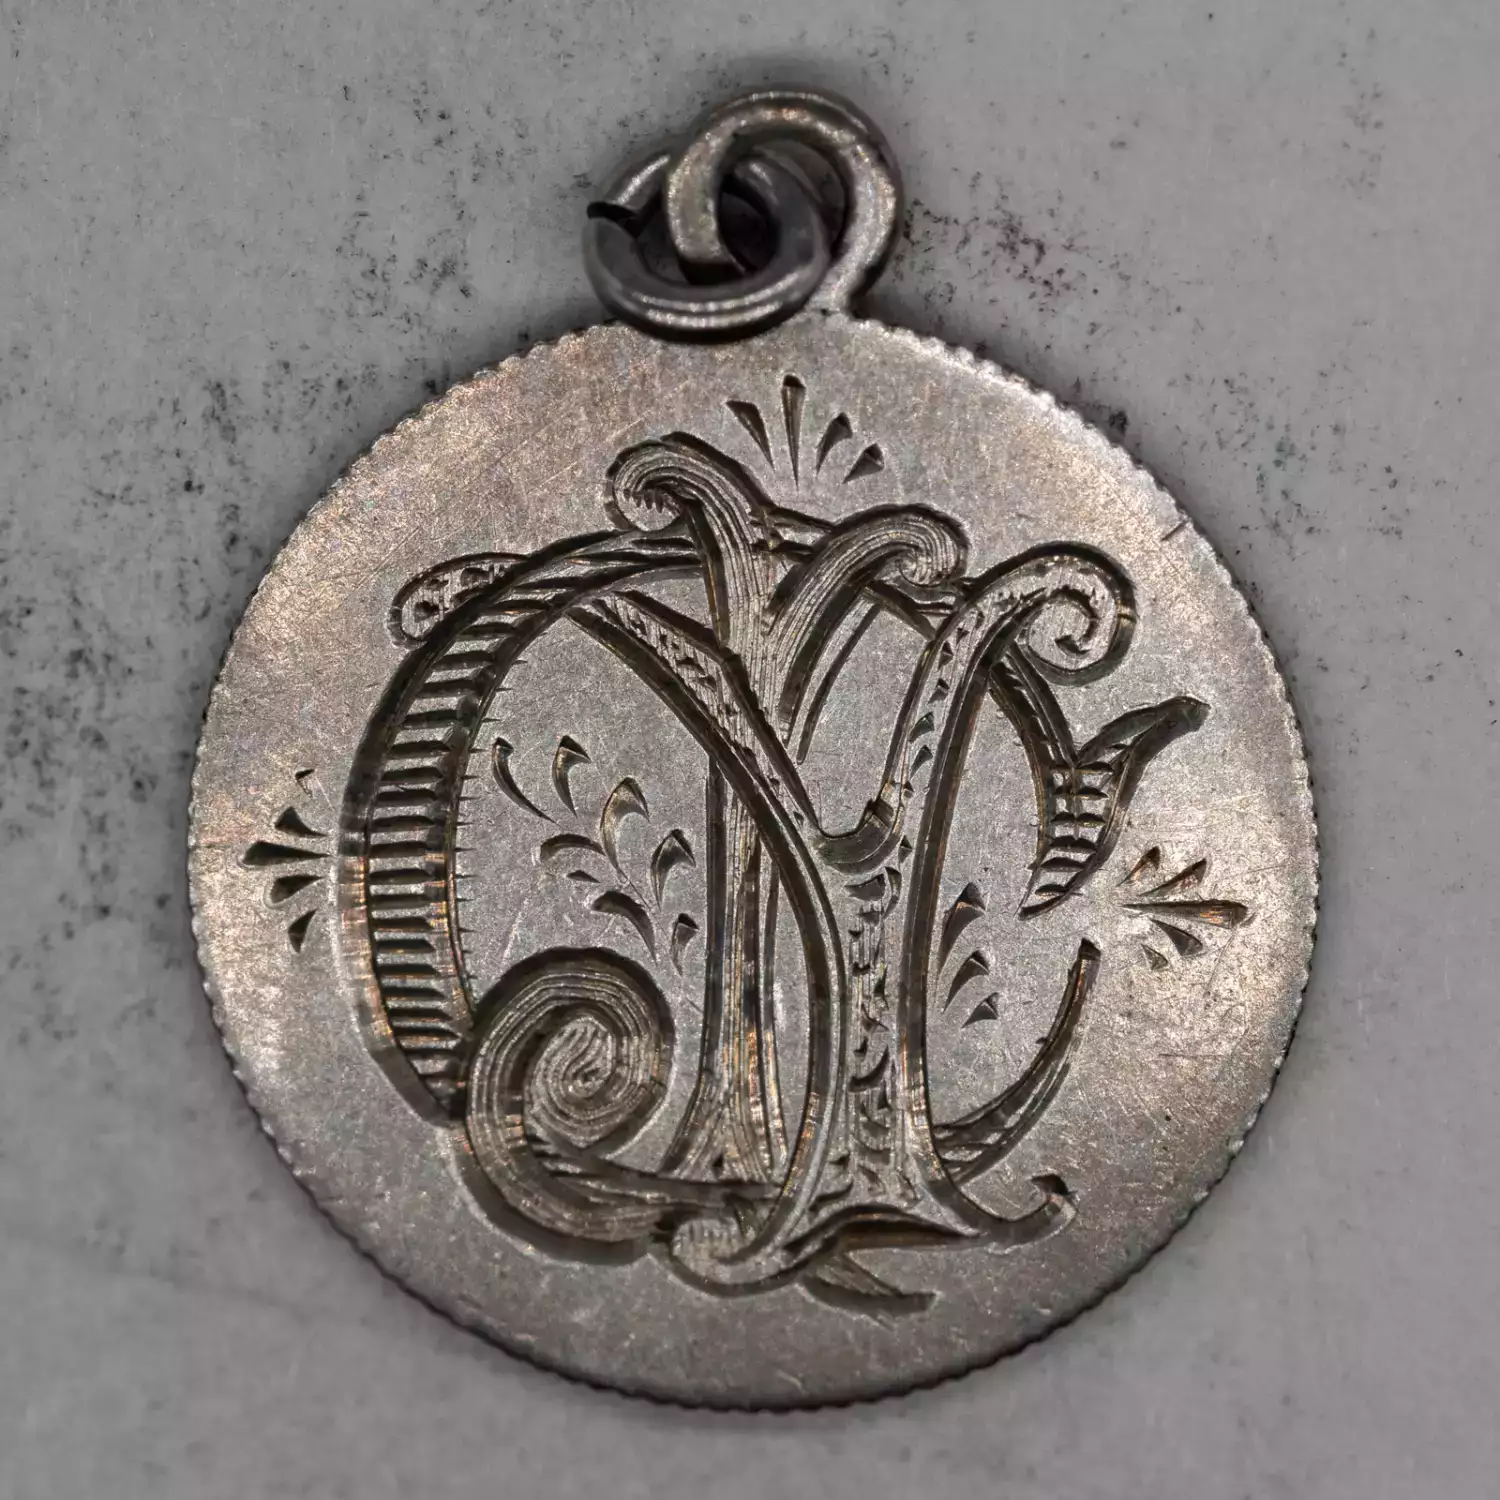 Half Dimes---Liberty Seated 1837-1873-Silver- 0.5 Dime (2)